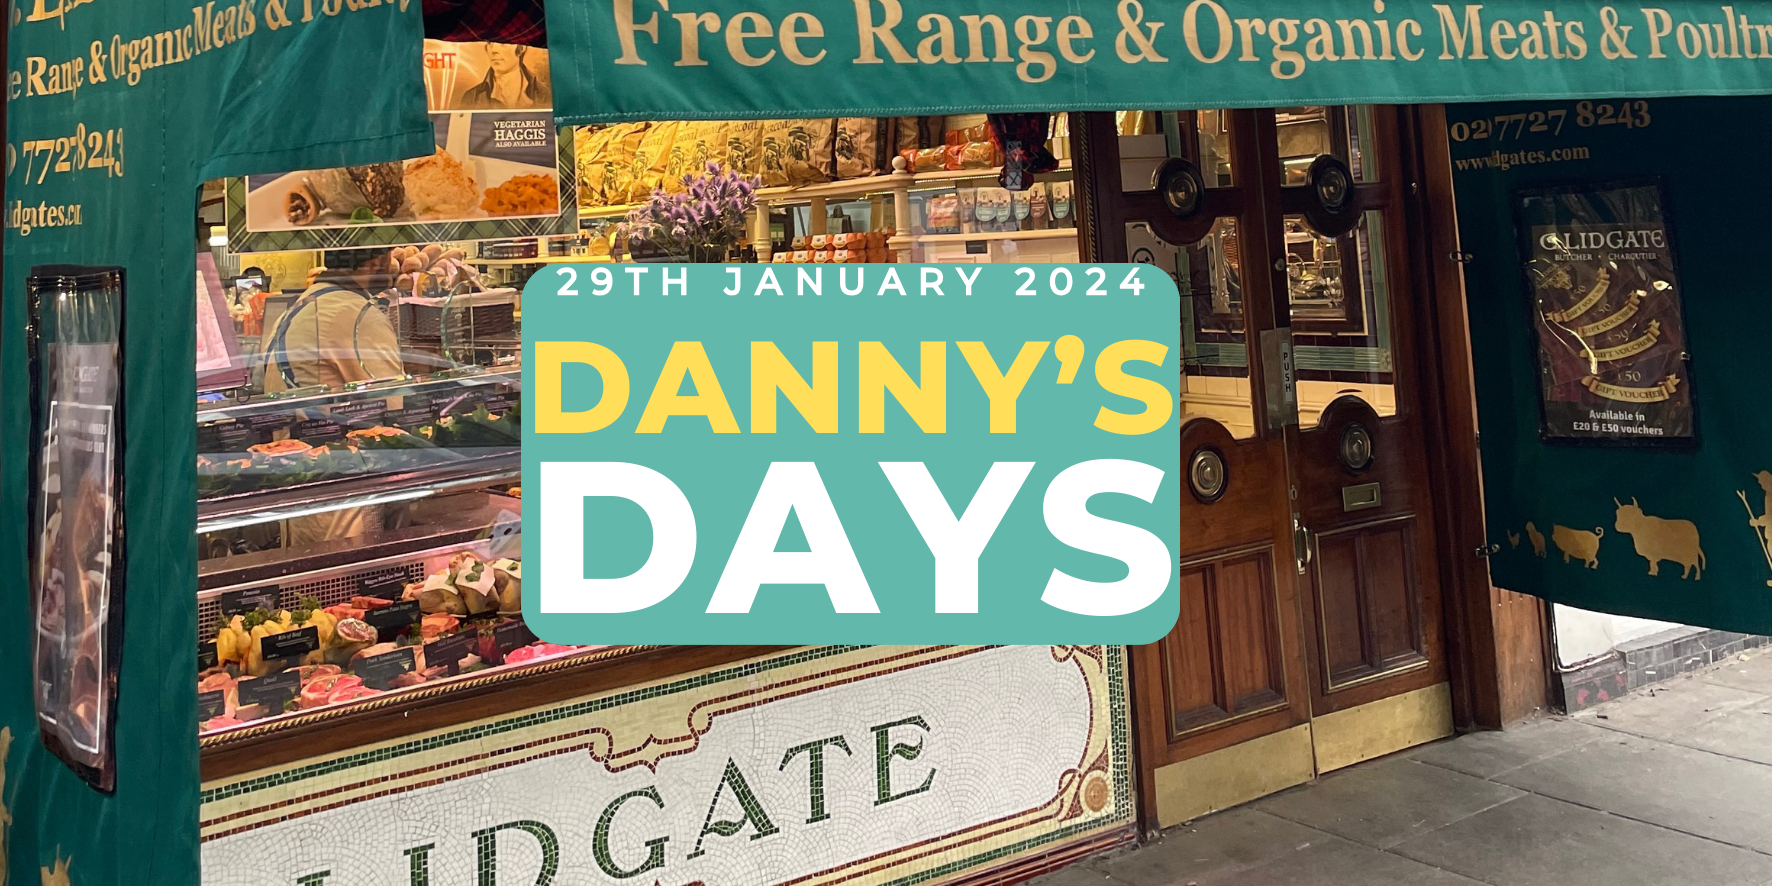 Danny's Days - 29th January 2024